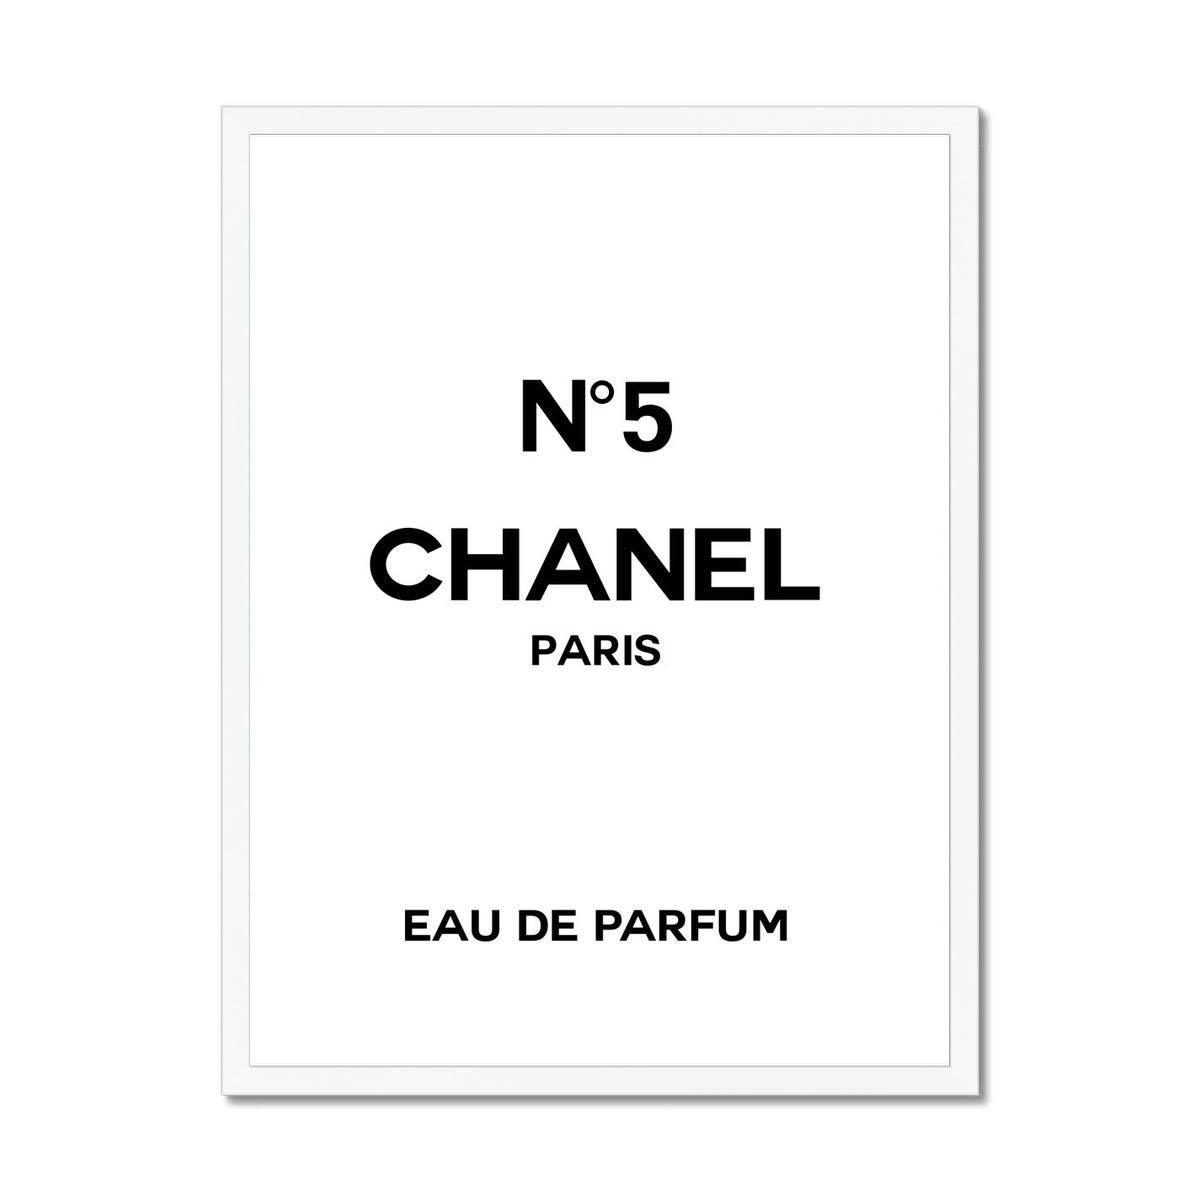 Chanel No. 5 Eau De Parfum Typography Framed Print